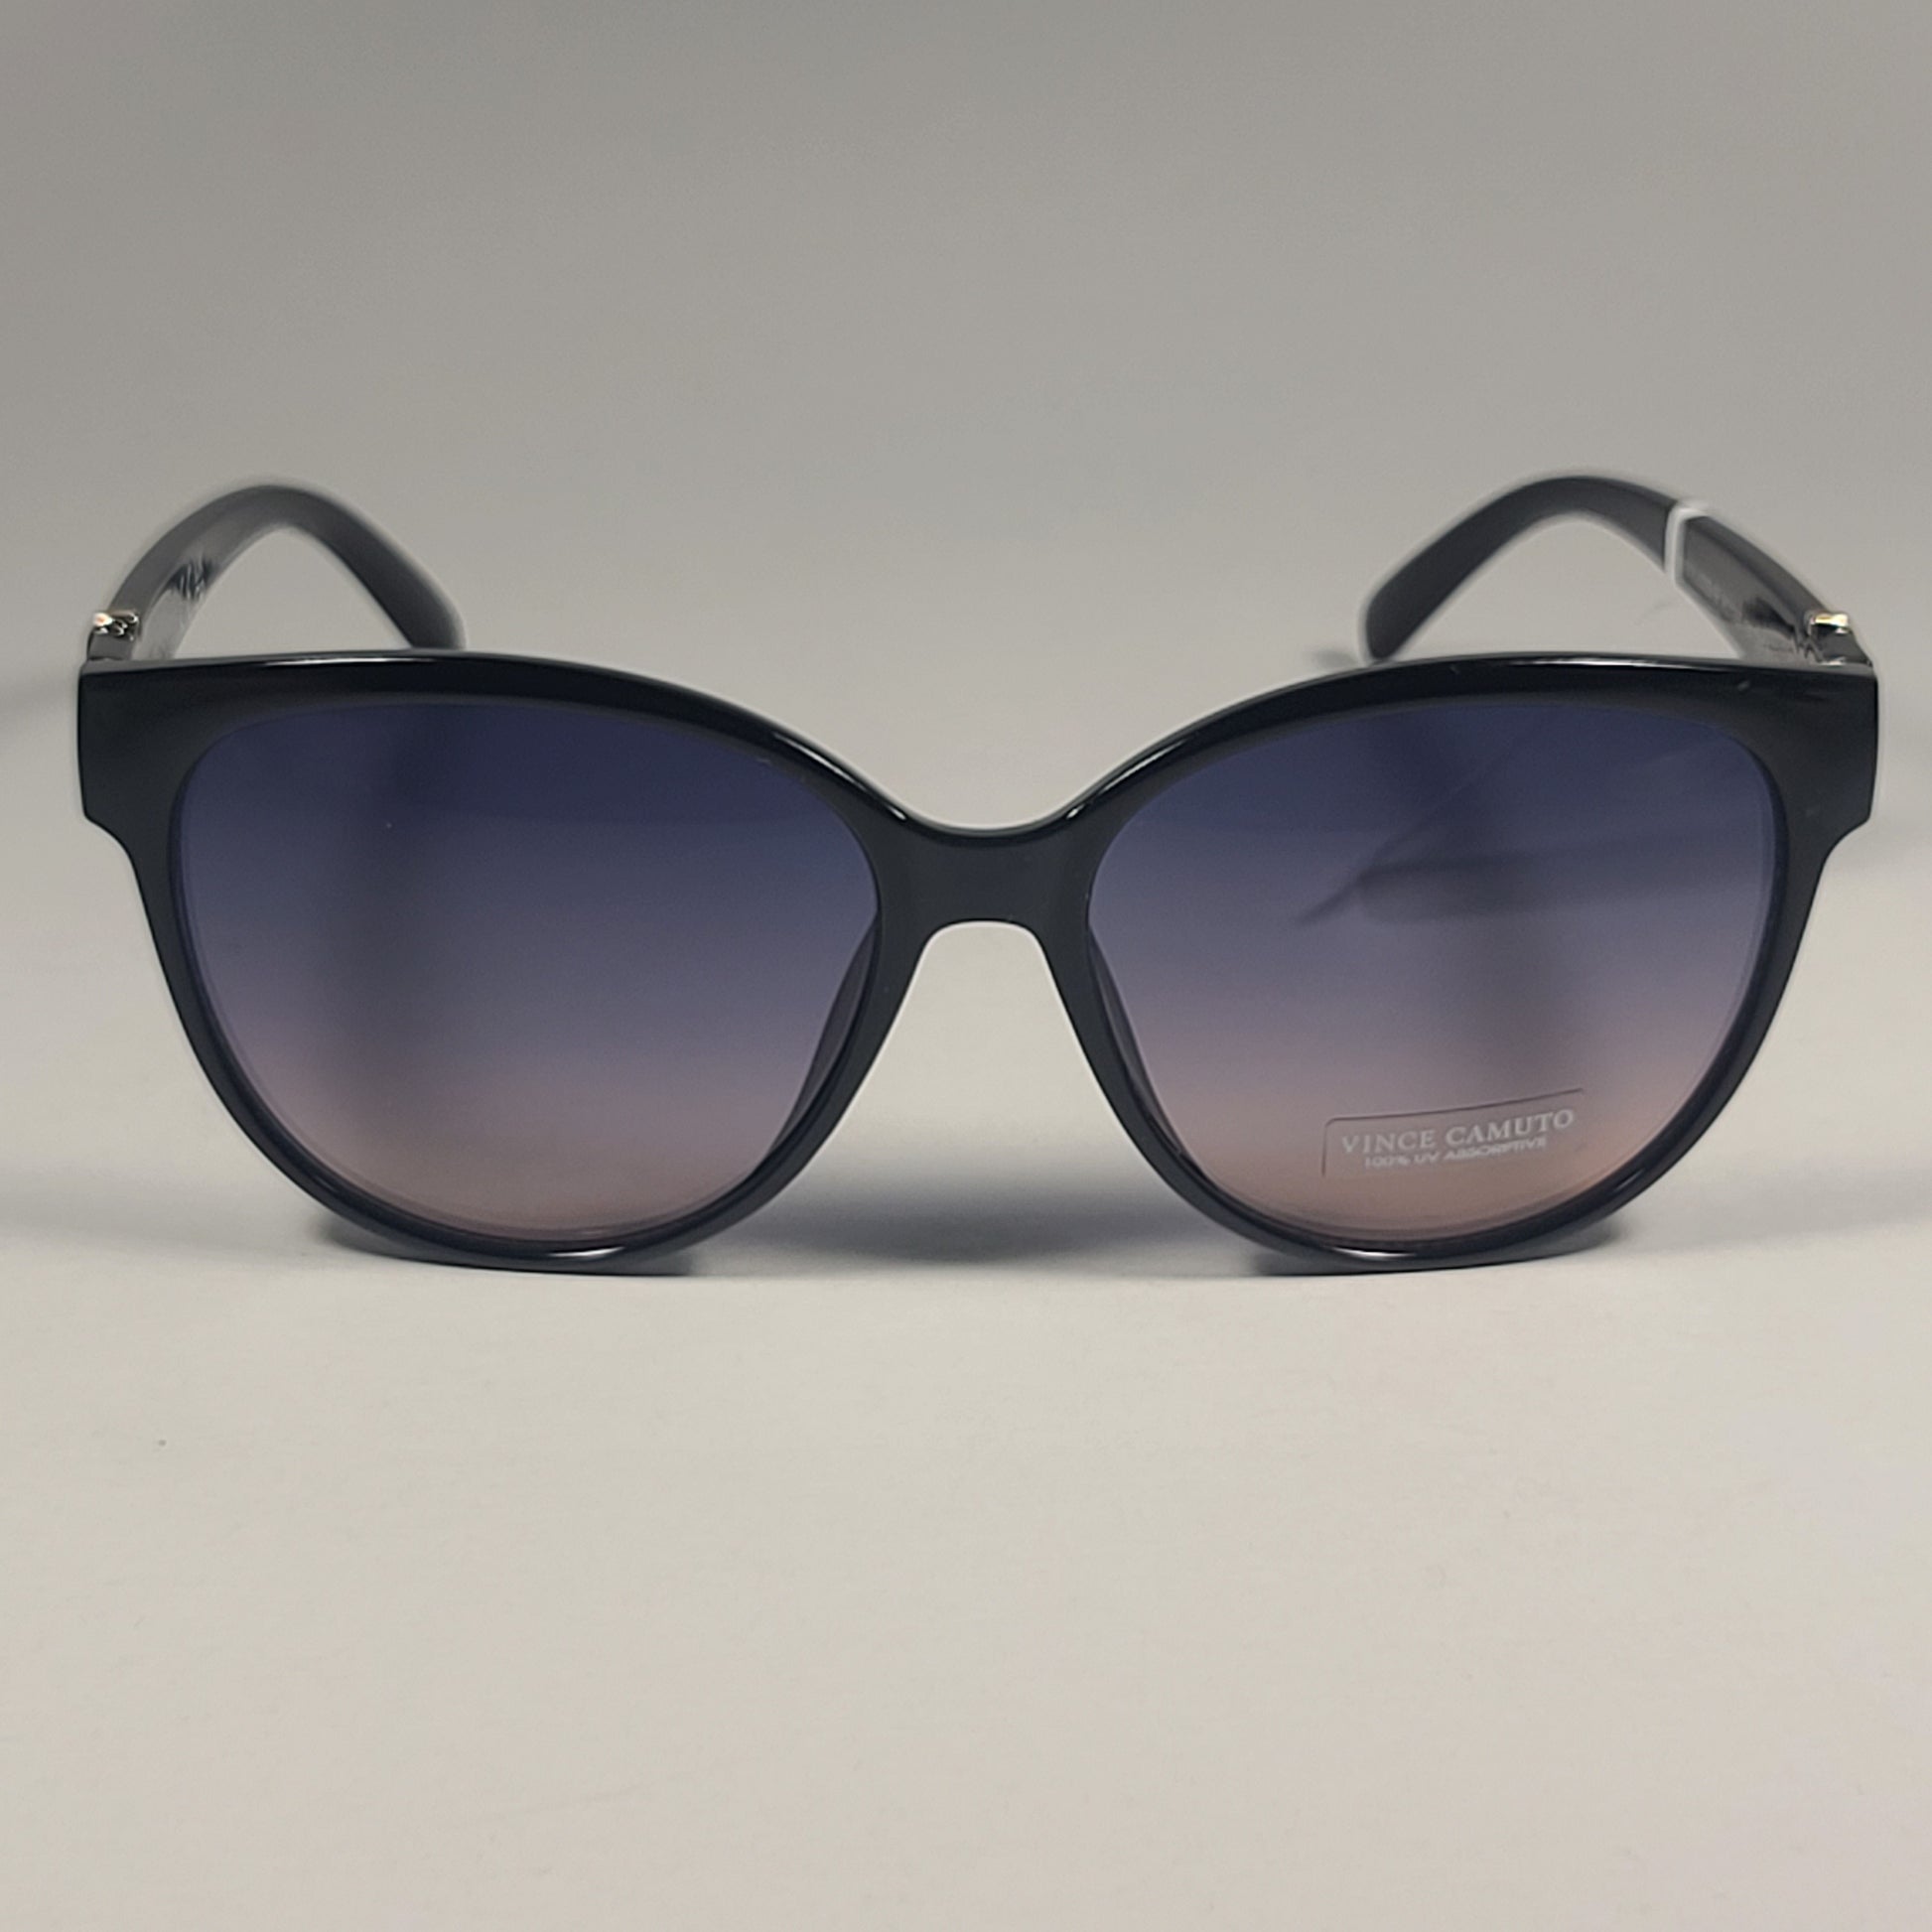 Vince Camuto VC1085 OX Cat Eye Sunglasses Shiny Black Frame Smoke Gradient Lens